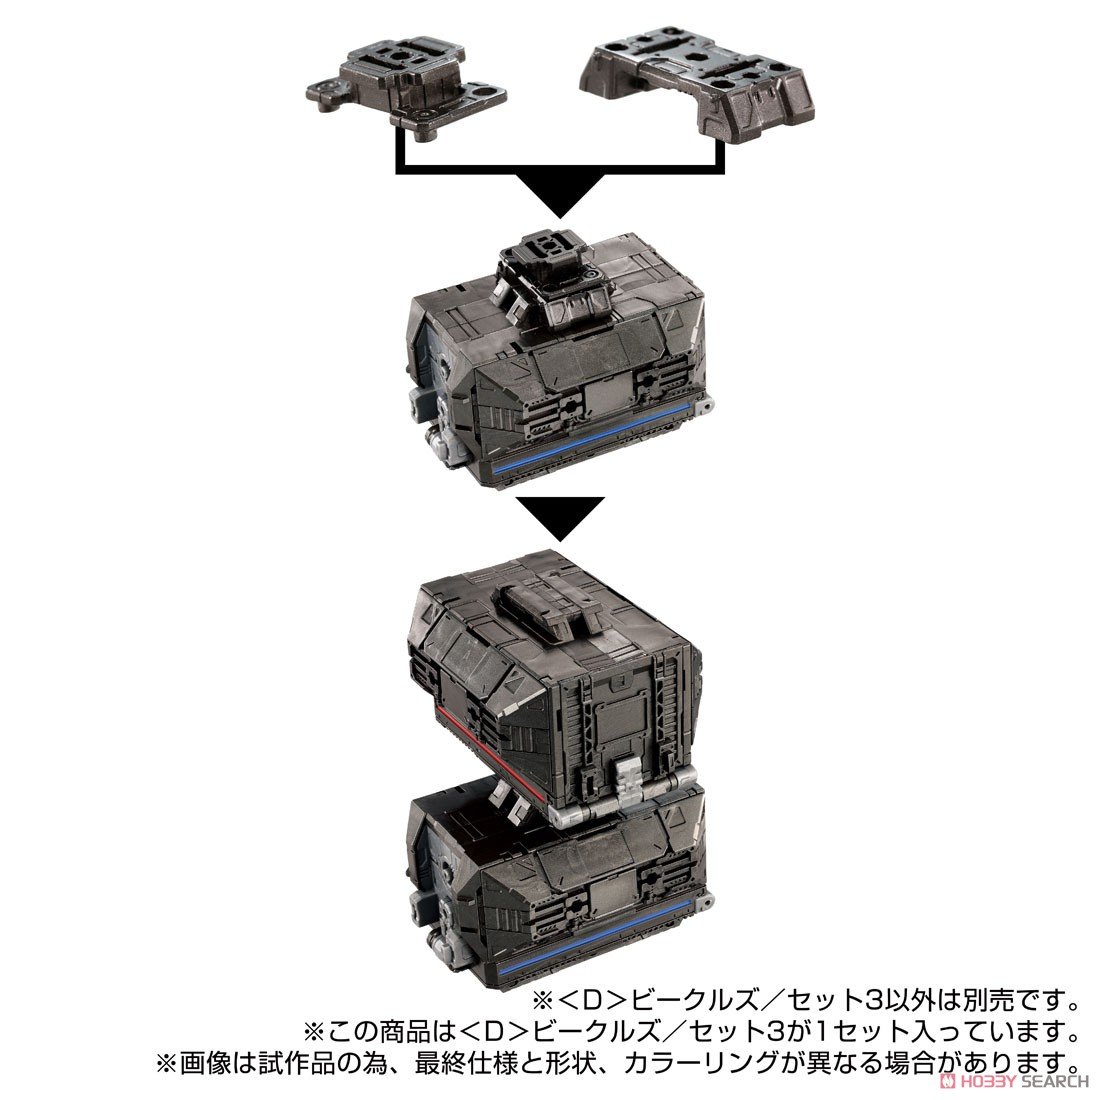 TakaraTomy - Diaclone - D-03 -  Vehicles Wave 3 Set (1/60 Scale) - Marvelous Toys